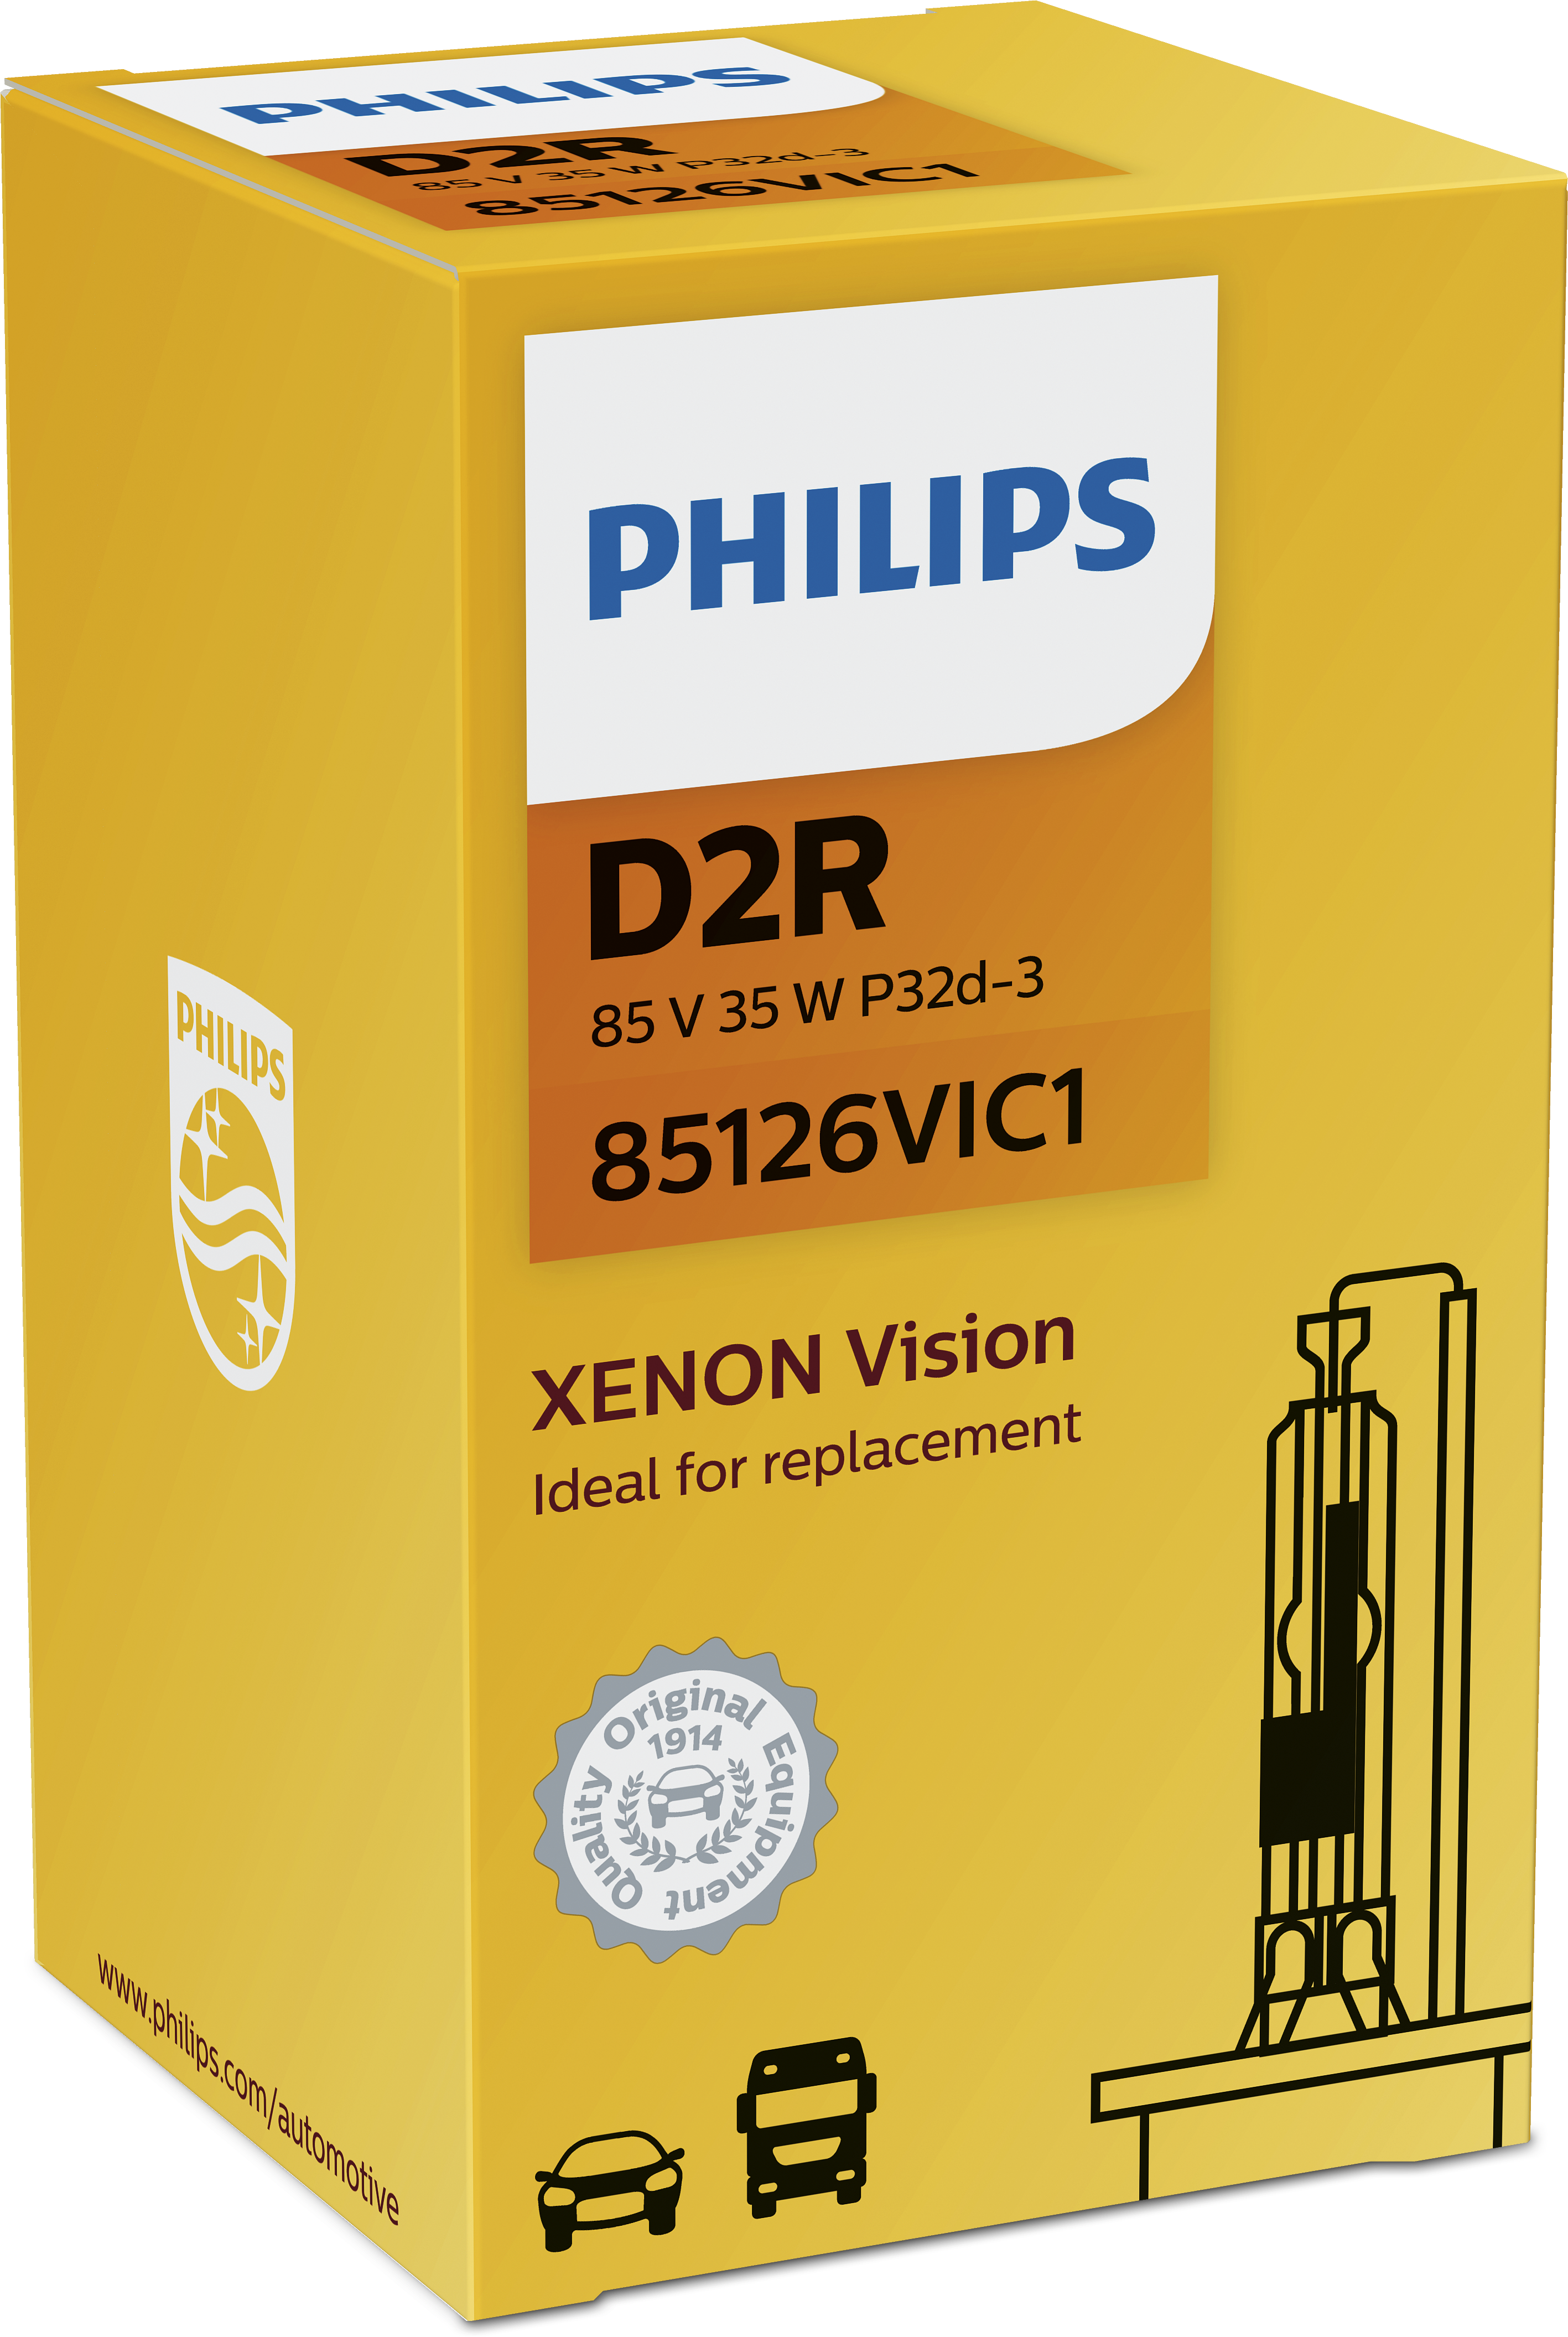 D2R Vision Xenon 85V 35W